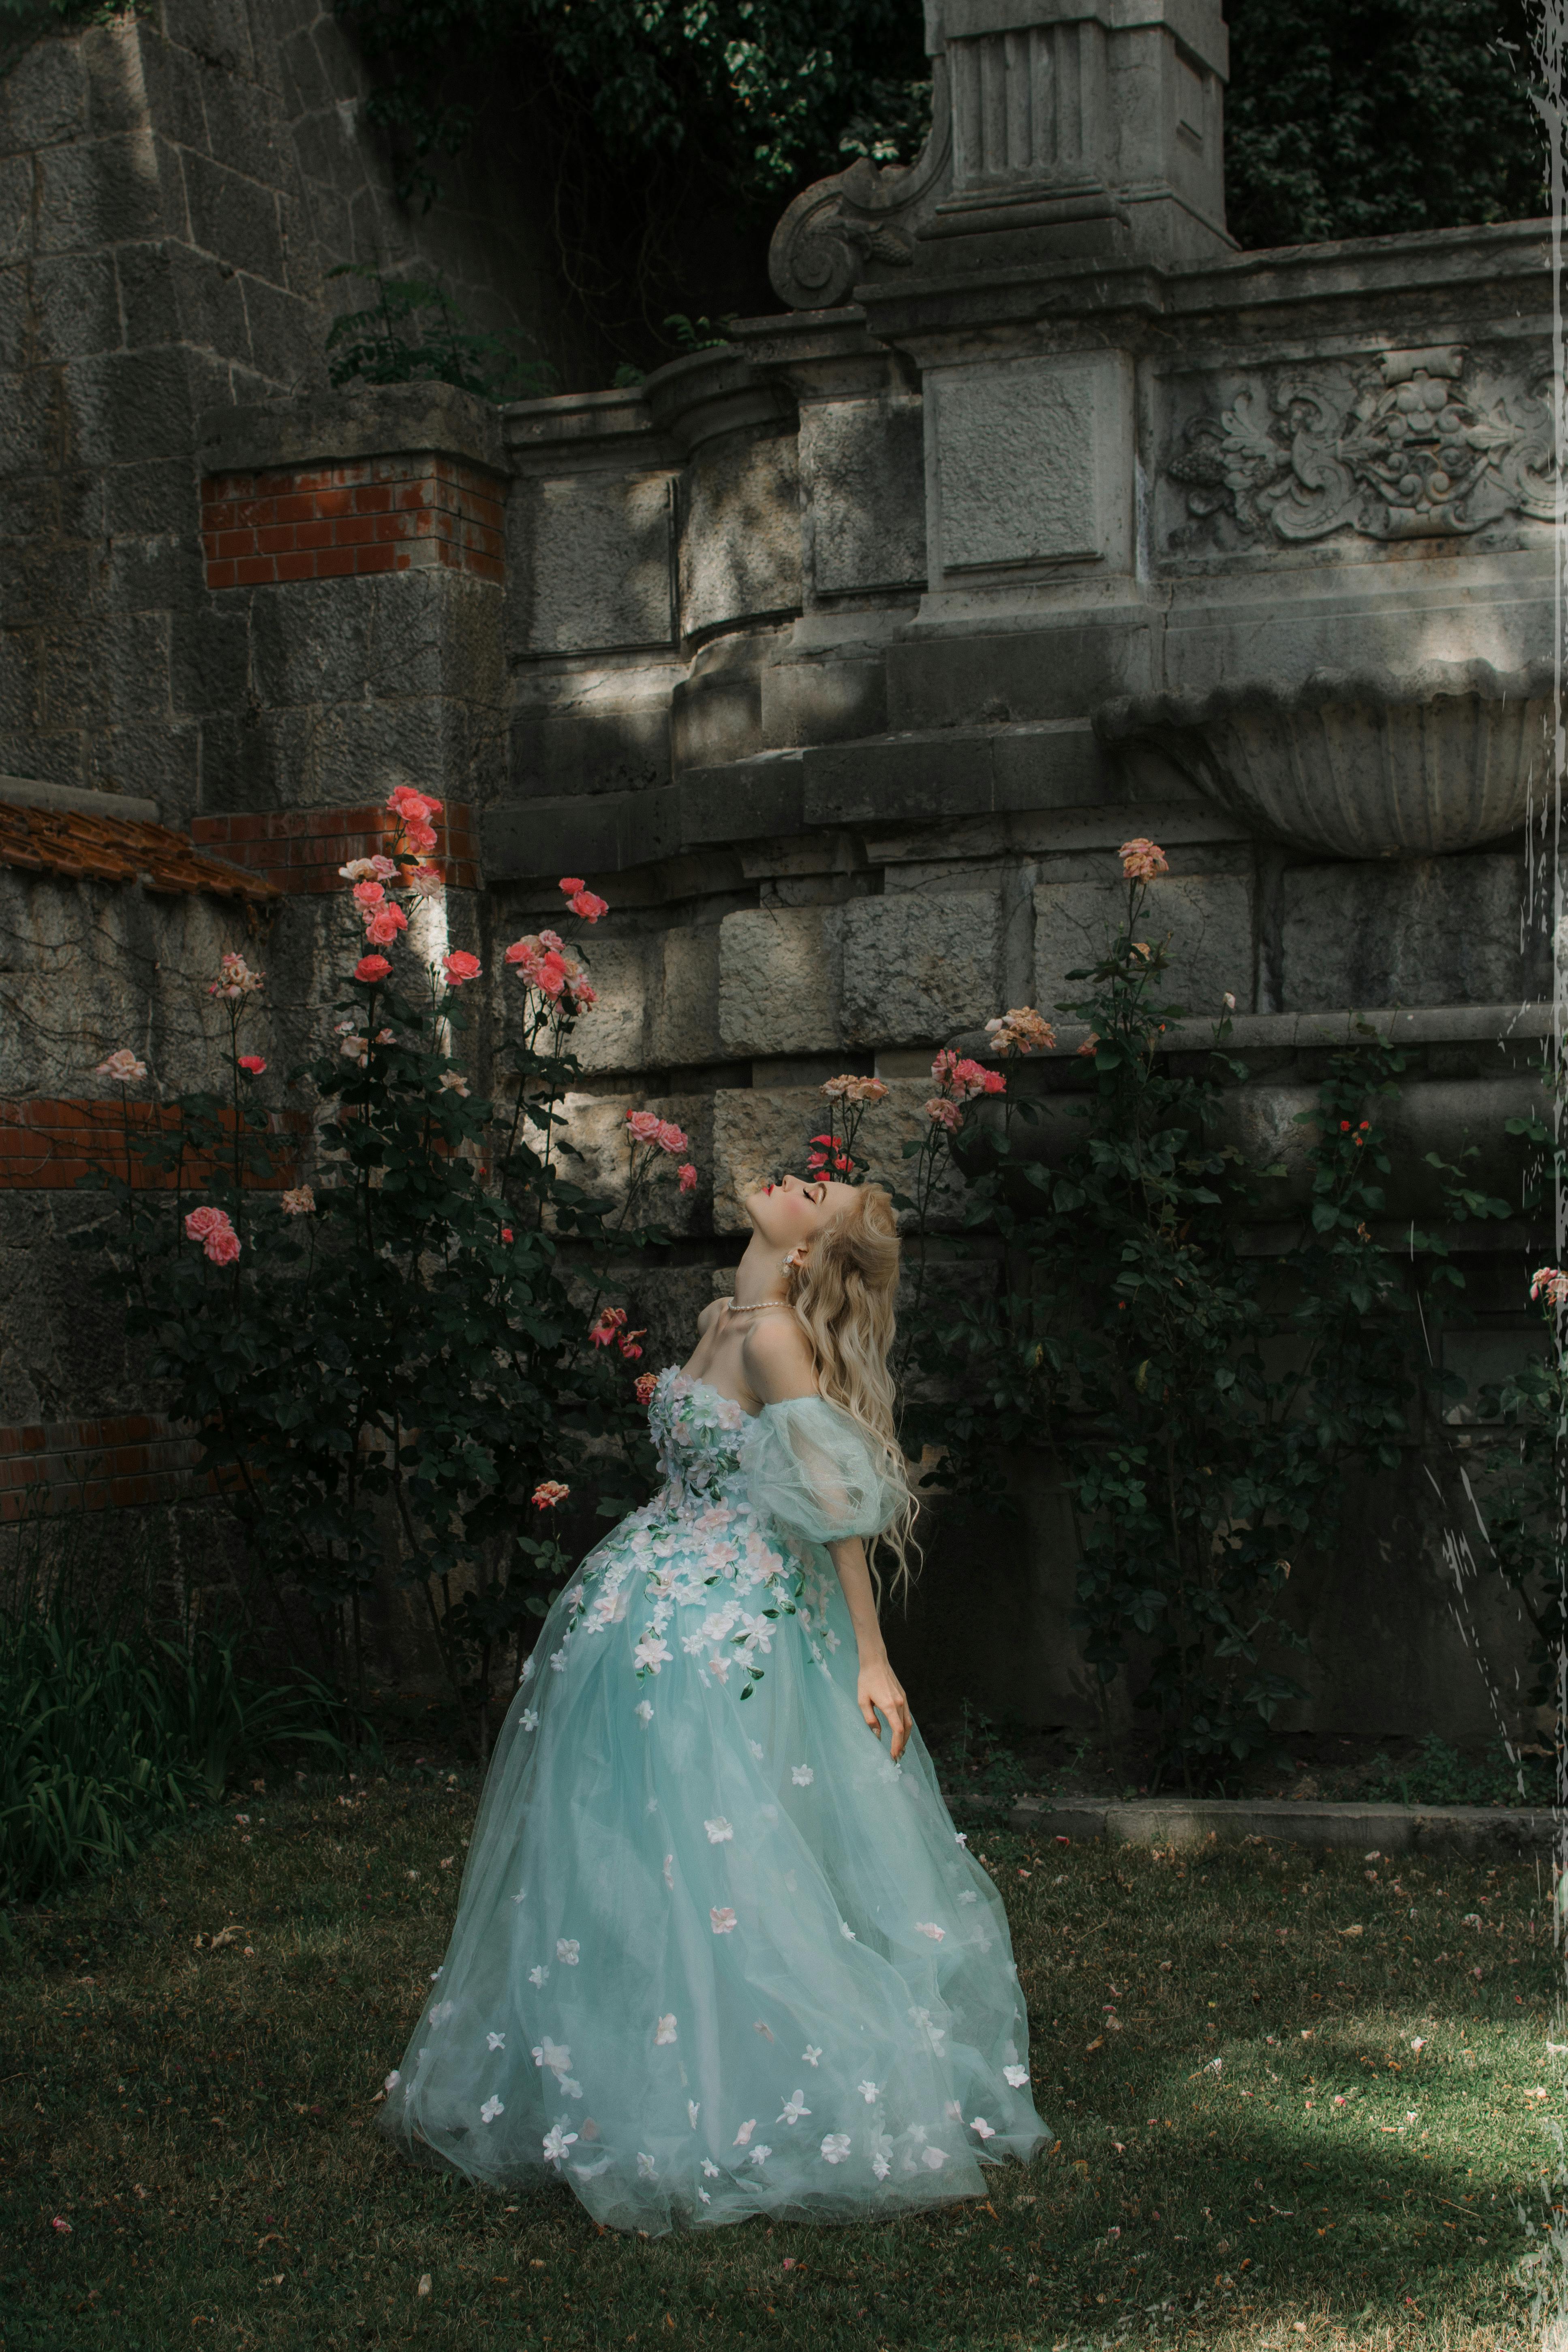 27 Princess-worthy Ball Gowns That Define Regal Elegance! - Praise Wedding  | Ball gowns, Gowns, Gowns dresses